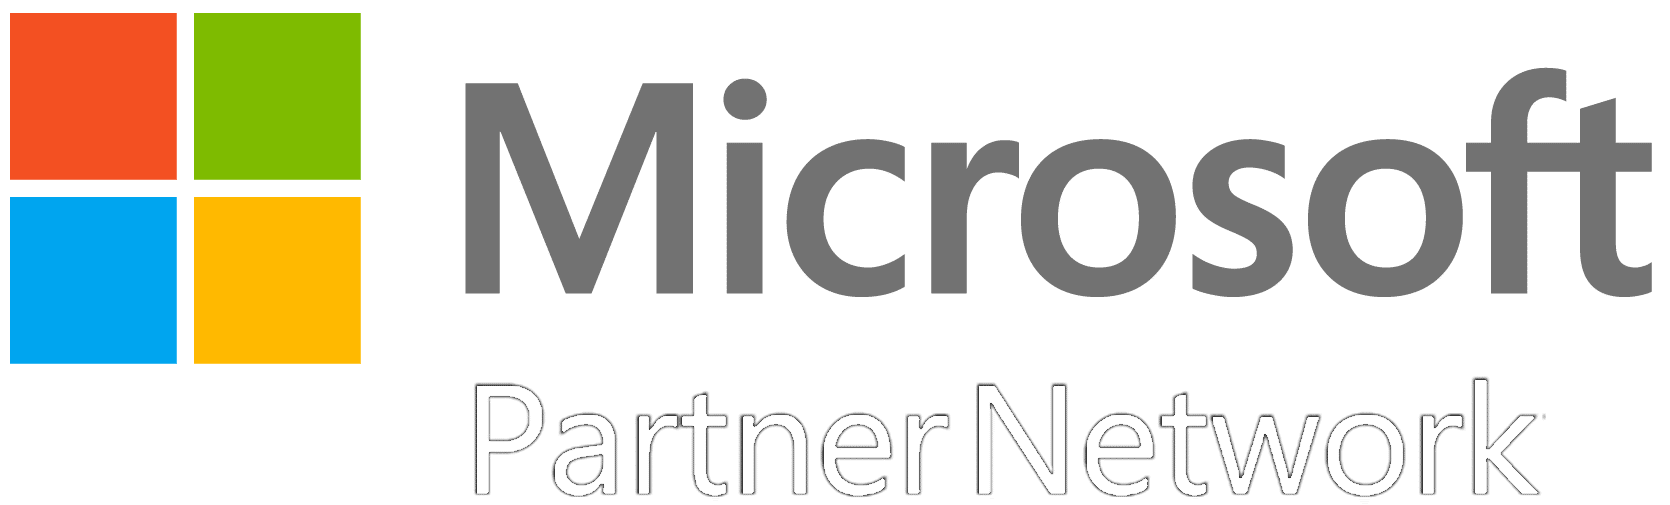 Microsoft Partner Network - Orlando Digital Business Services